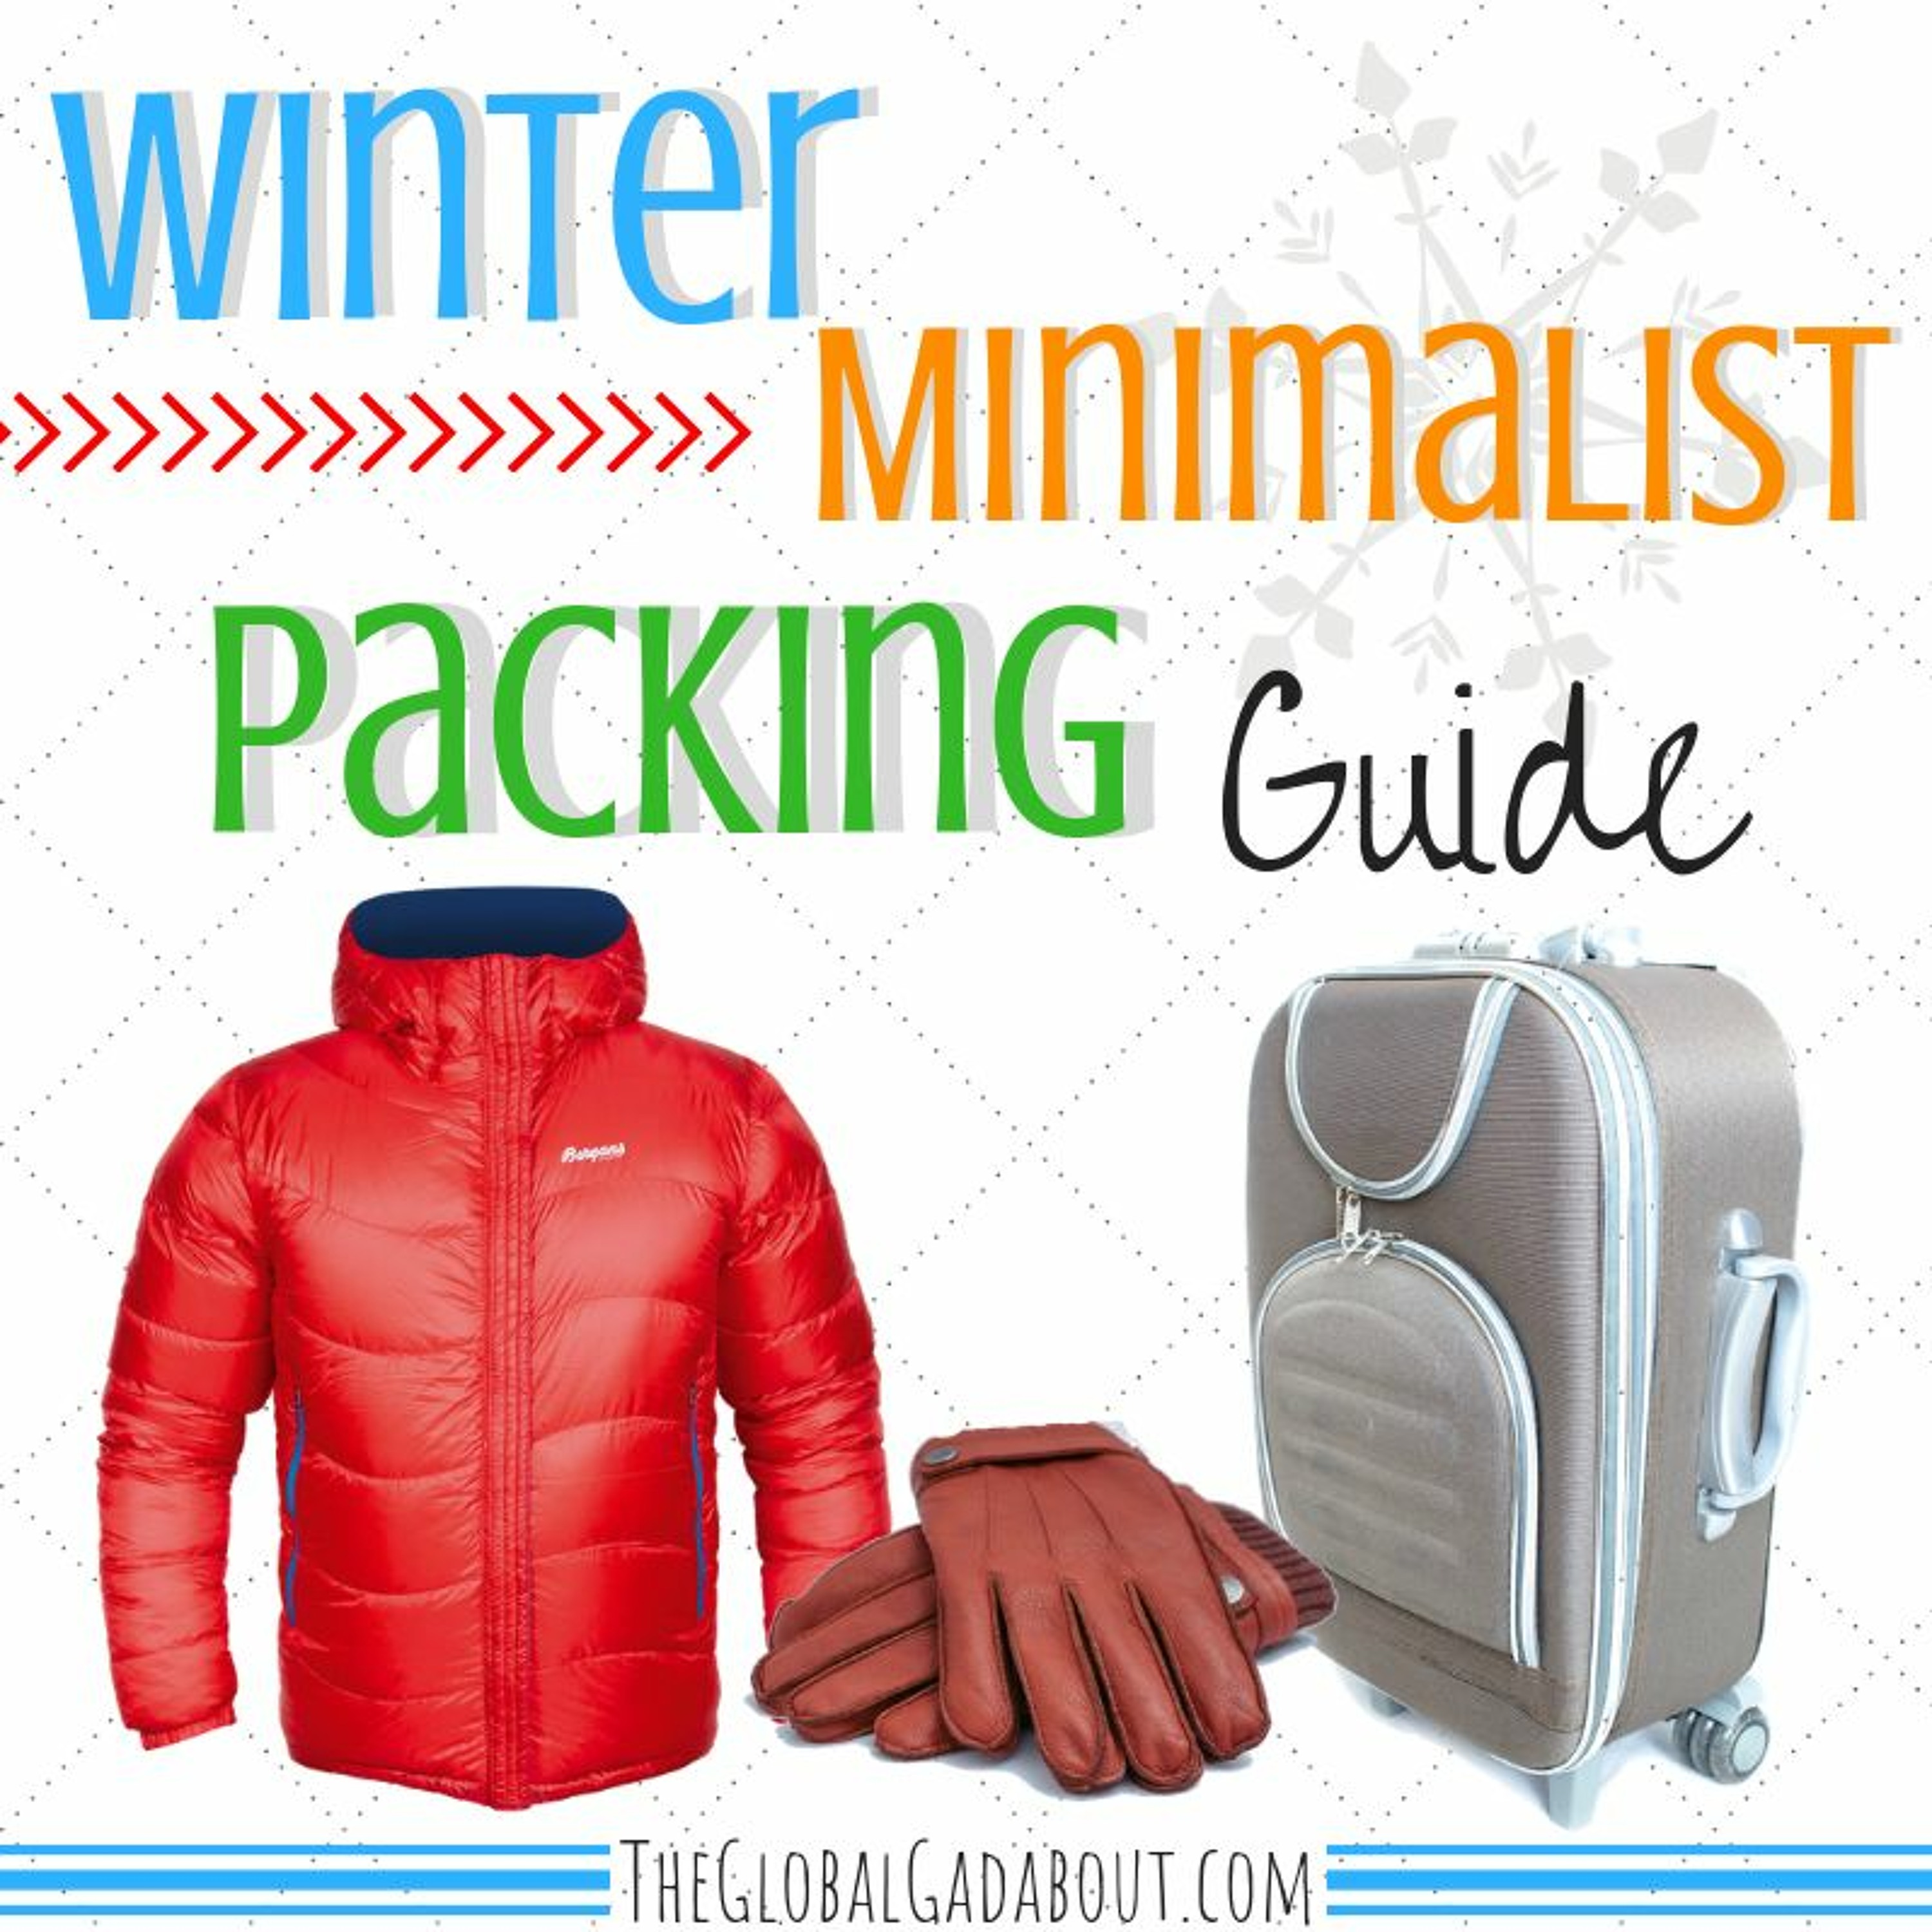 Winter Minimalist Packing